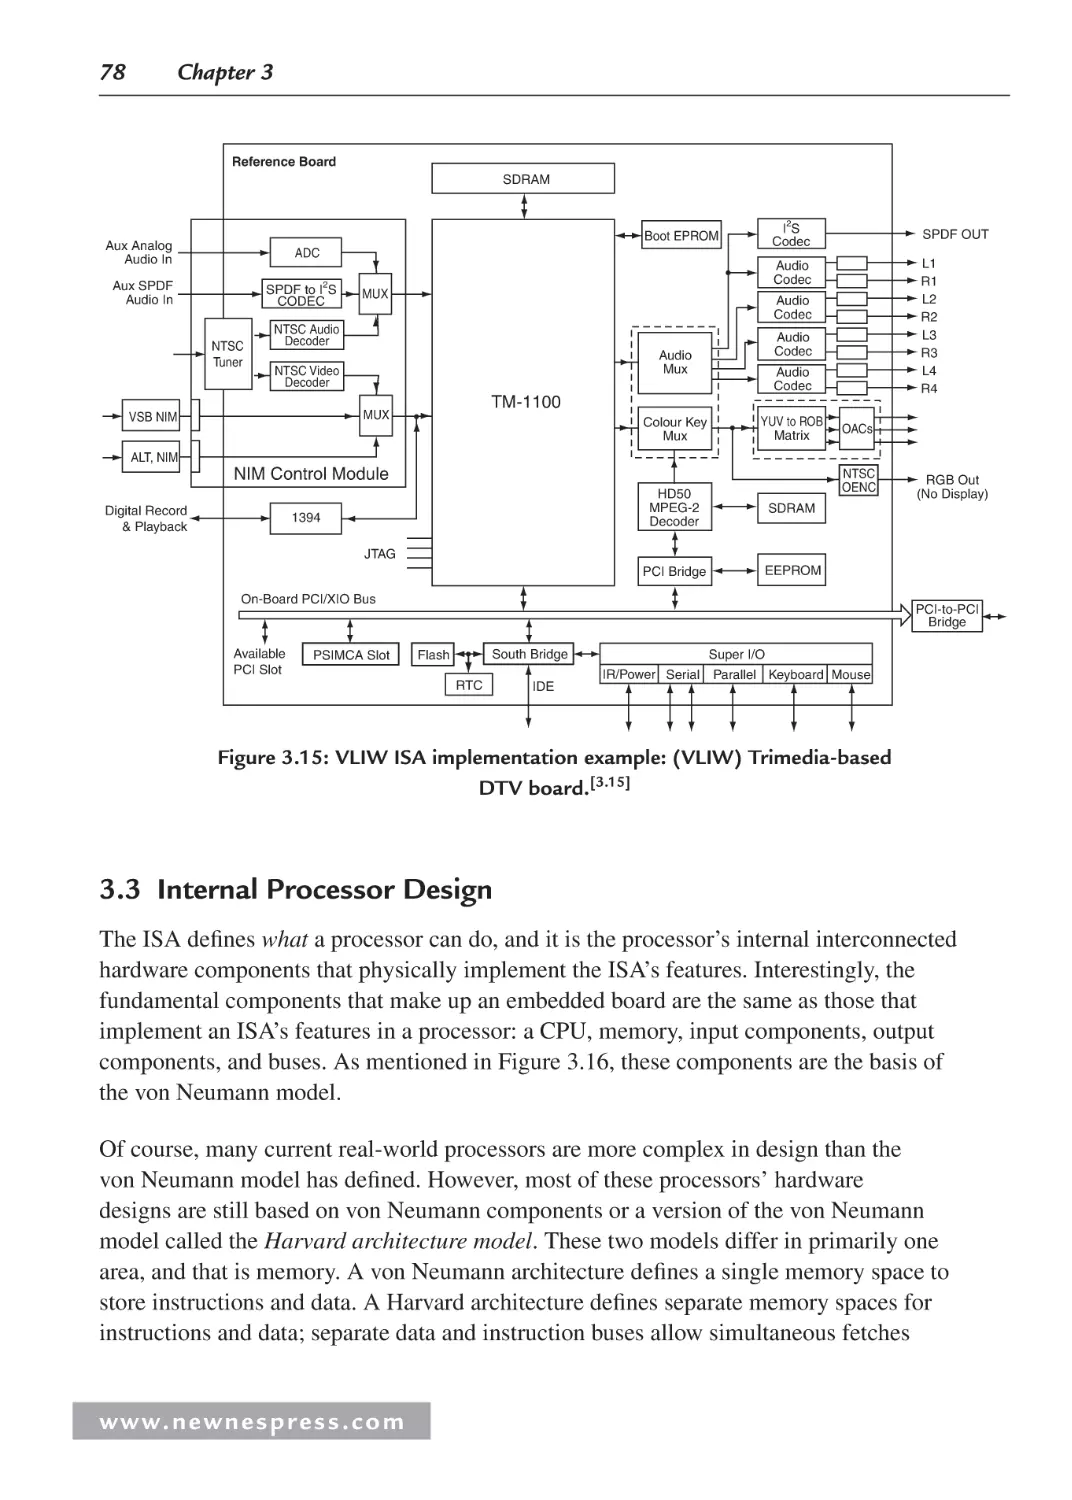 3.3 Internal Processor Design